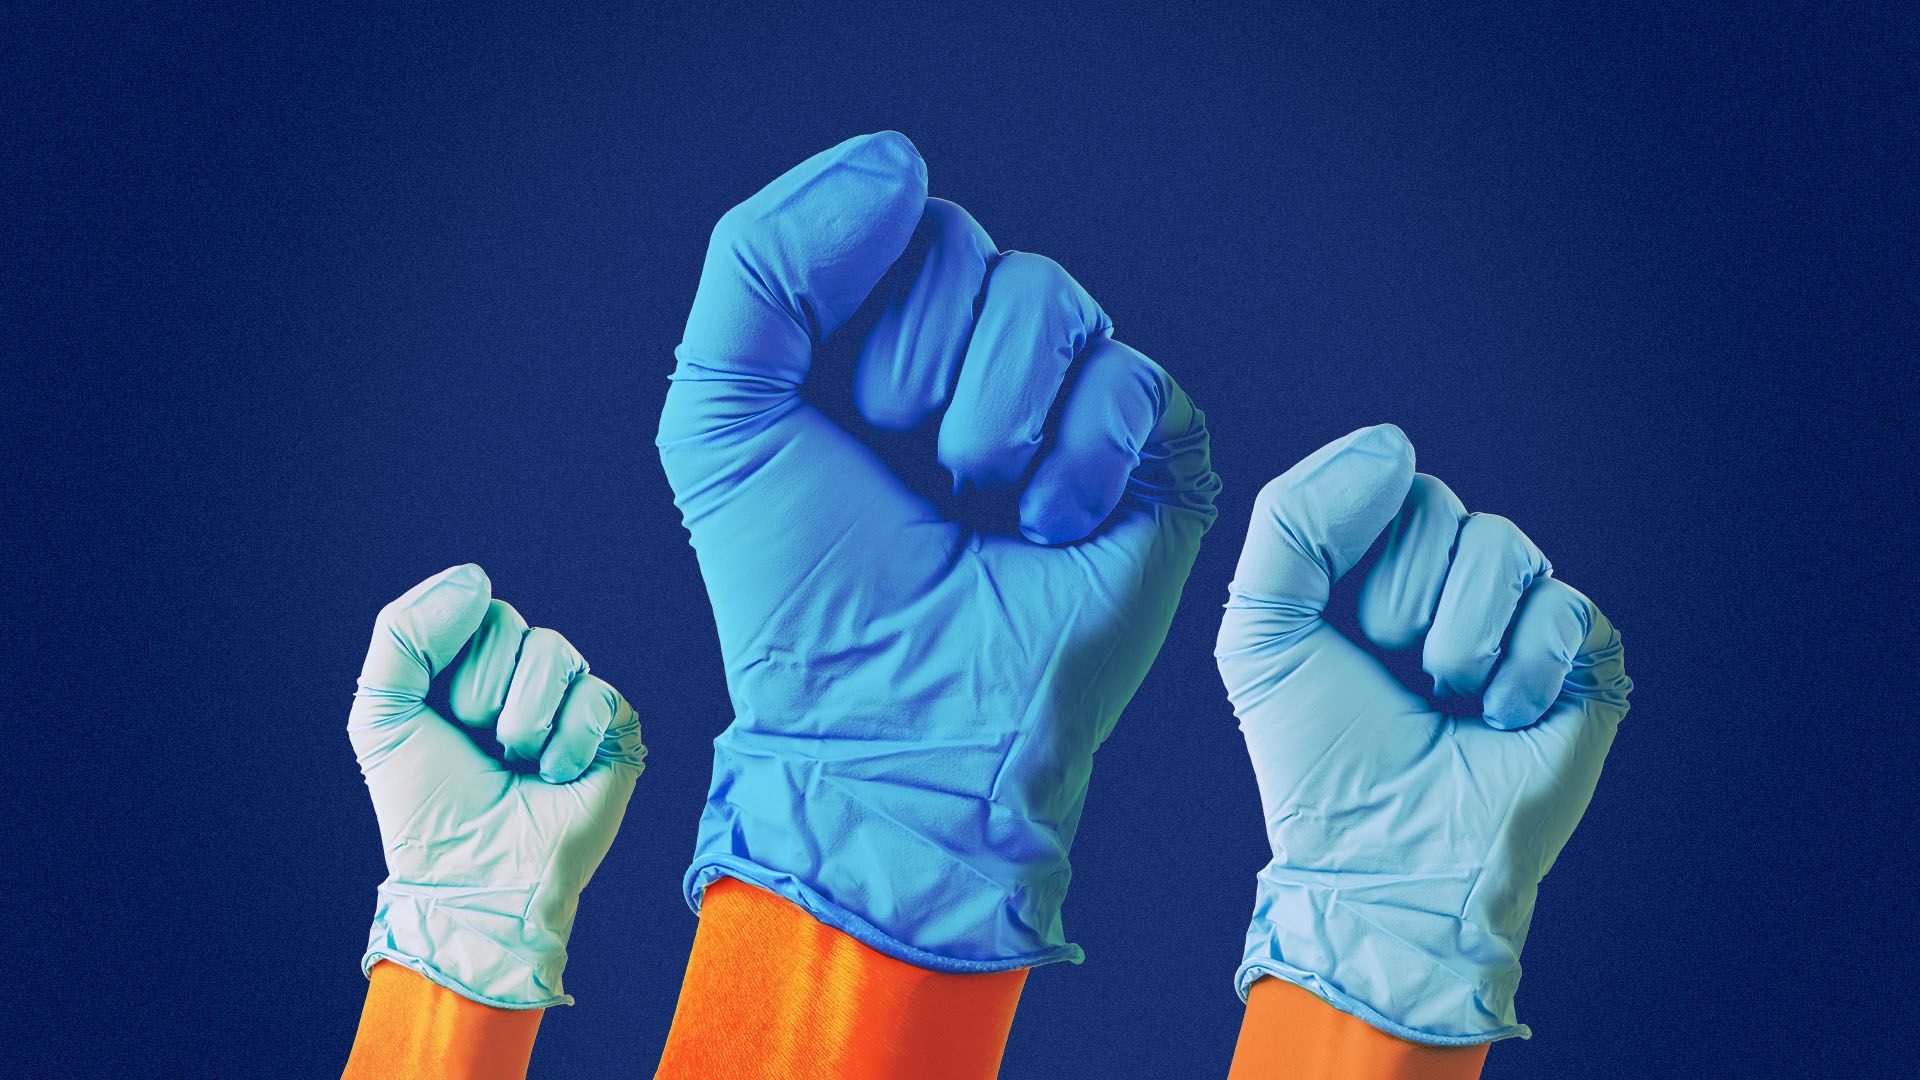 illustration of hands in fist wearing medical gloves